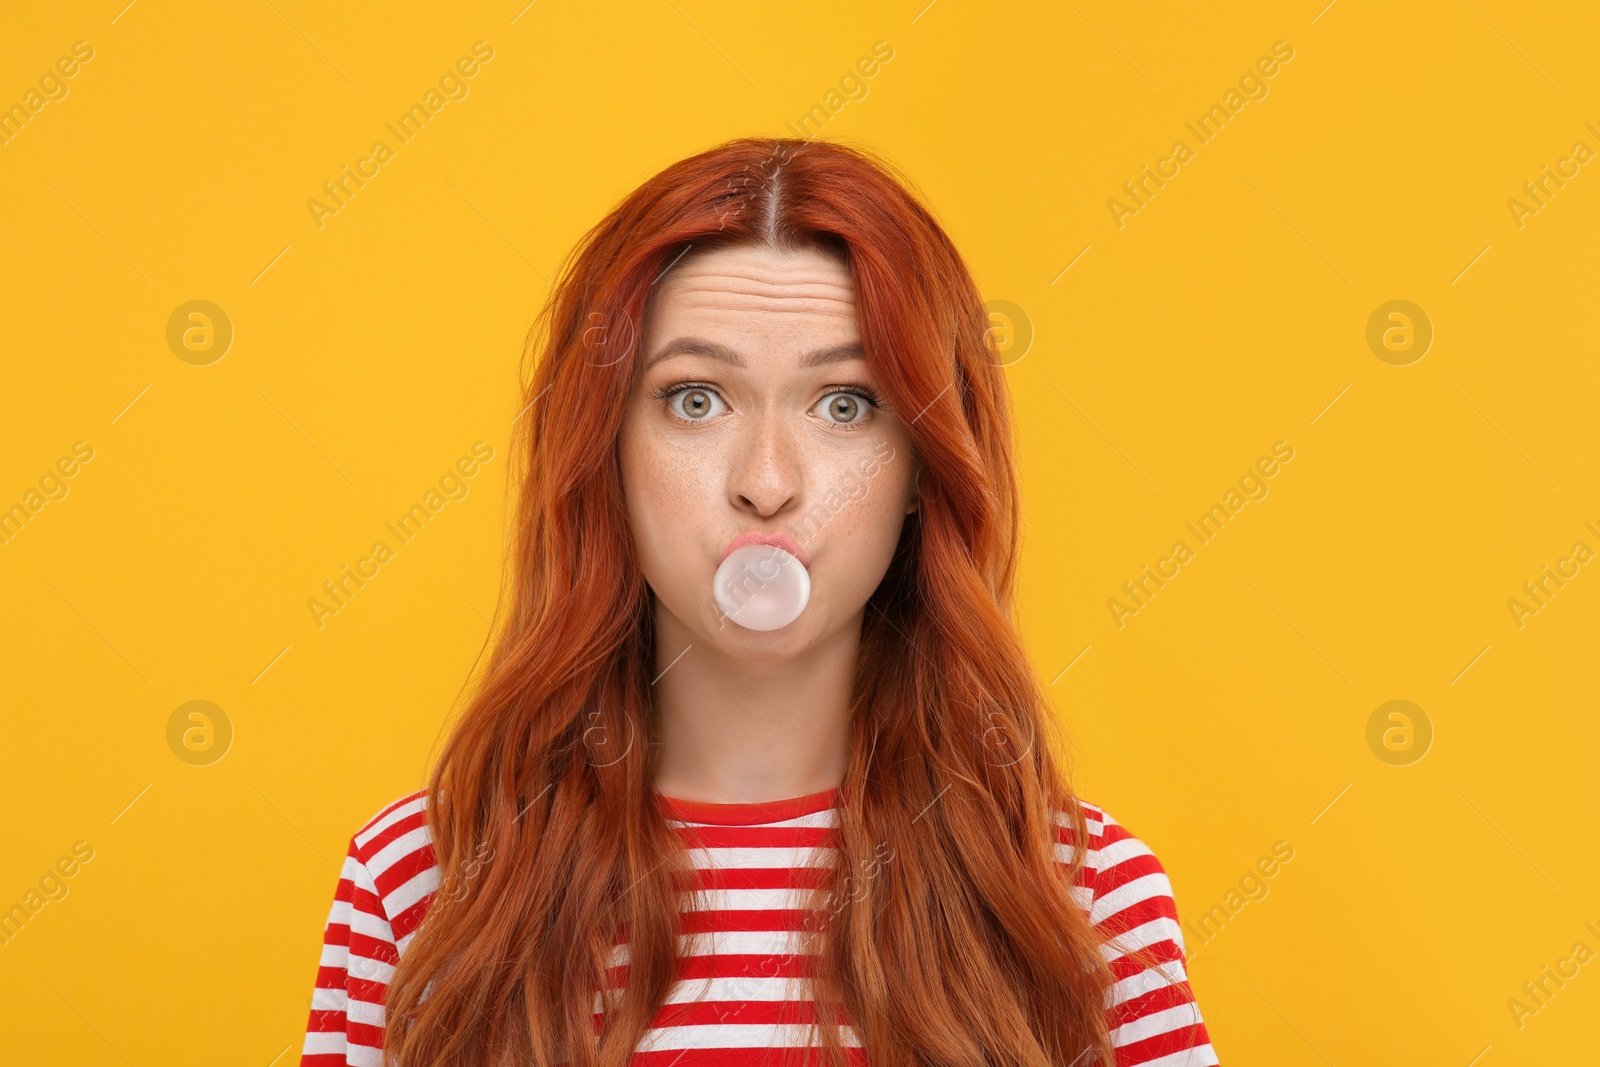 Photo of Portrait of surprised woman blowing bubble gum on orange background